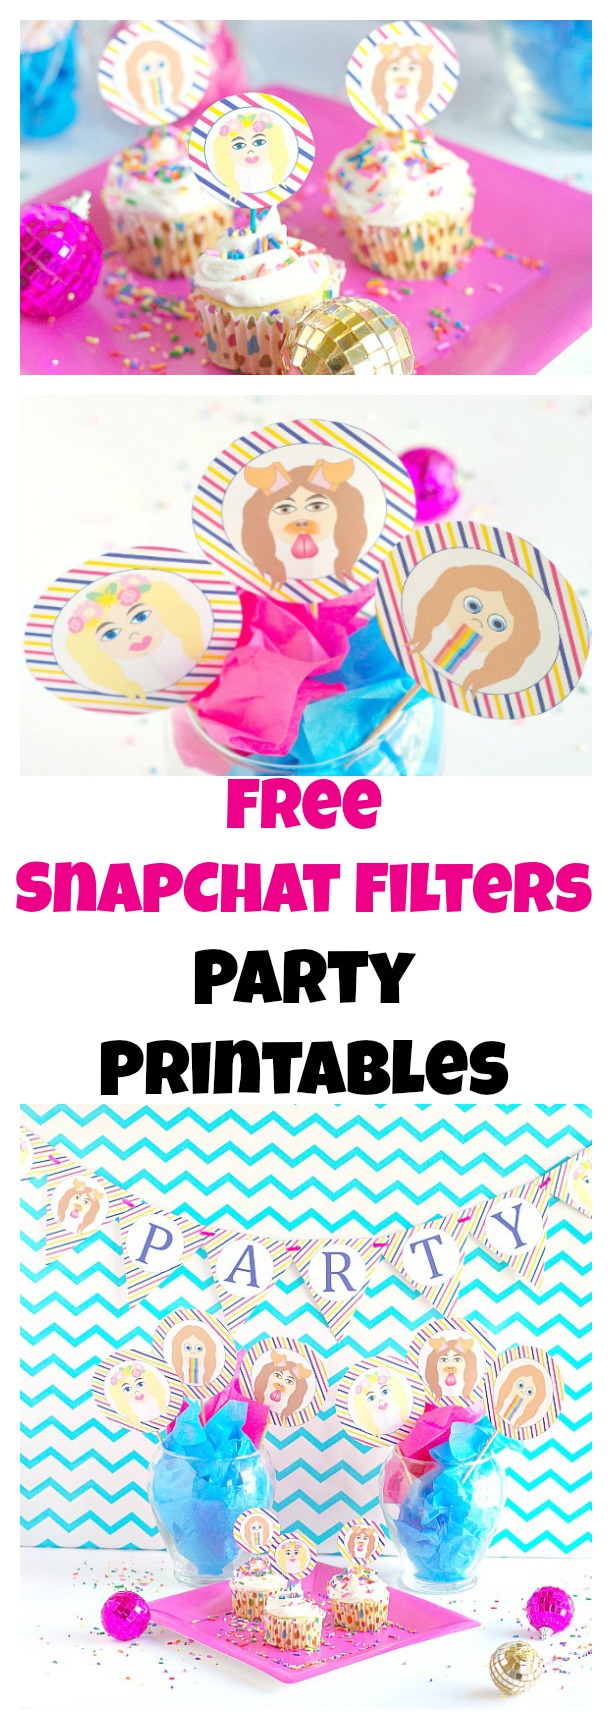 Free Snapchat Party Printables